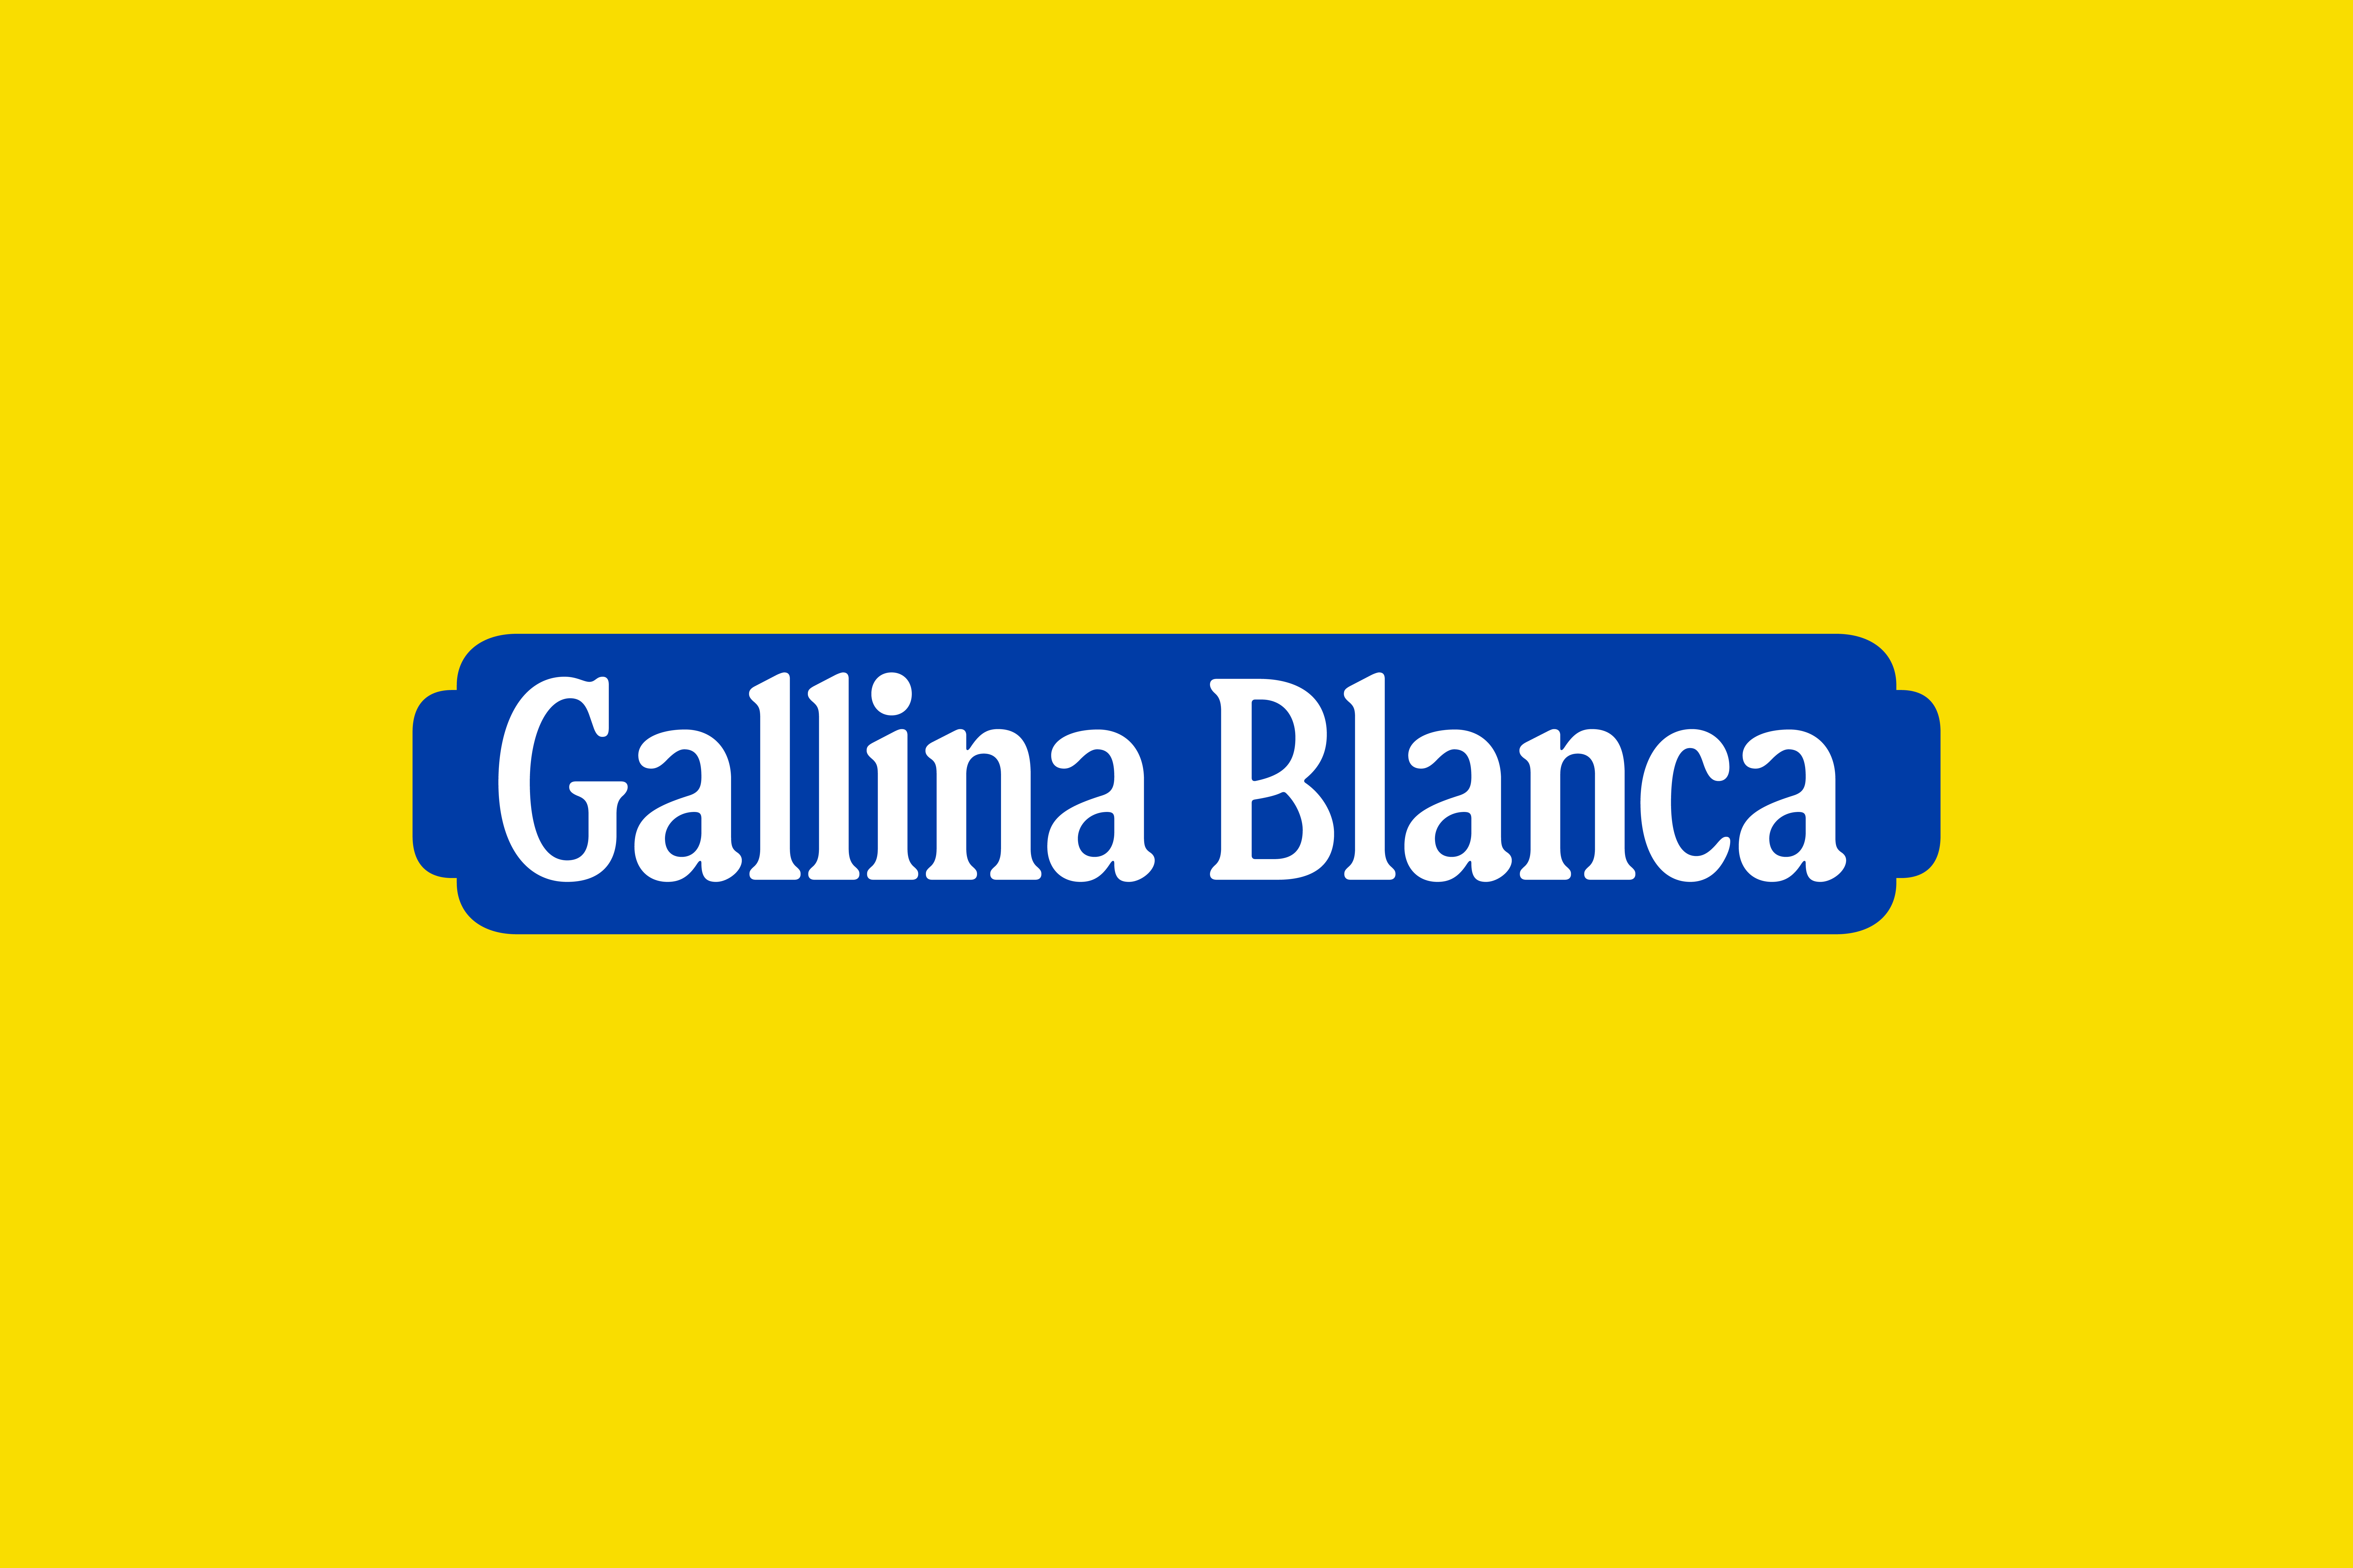 Rebranding Evolution of the Traditional Gallina Blanca by Morillas